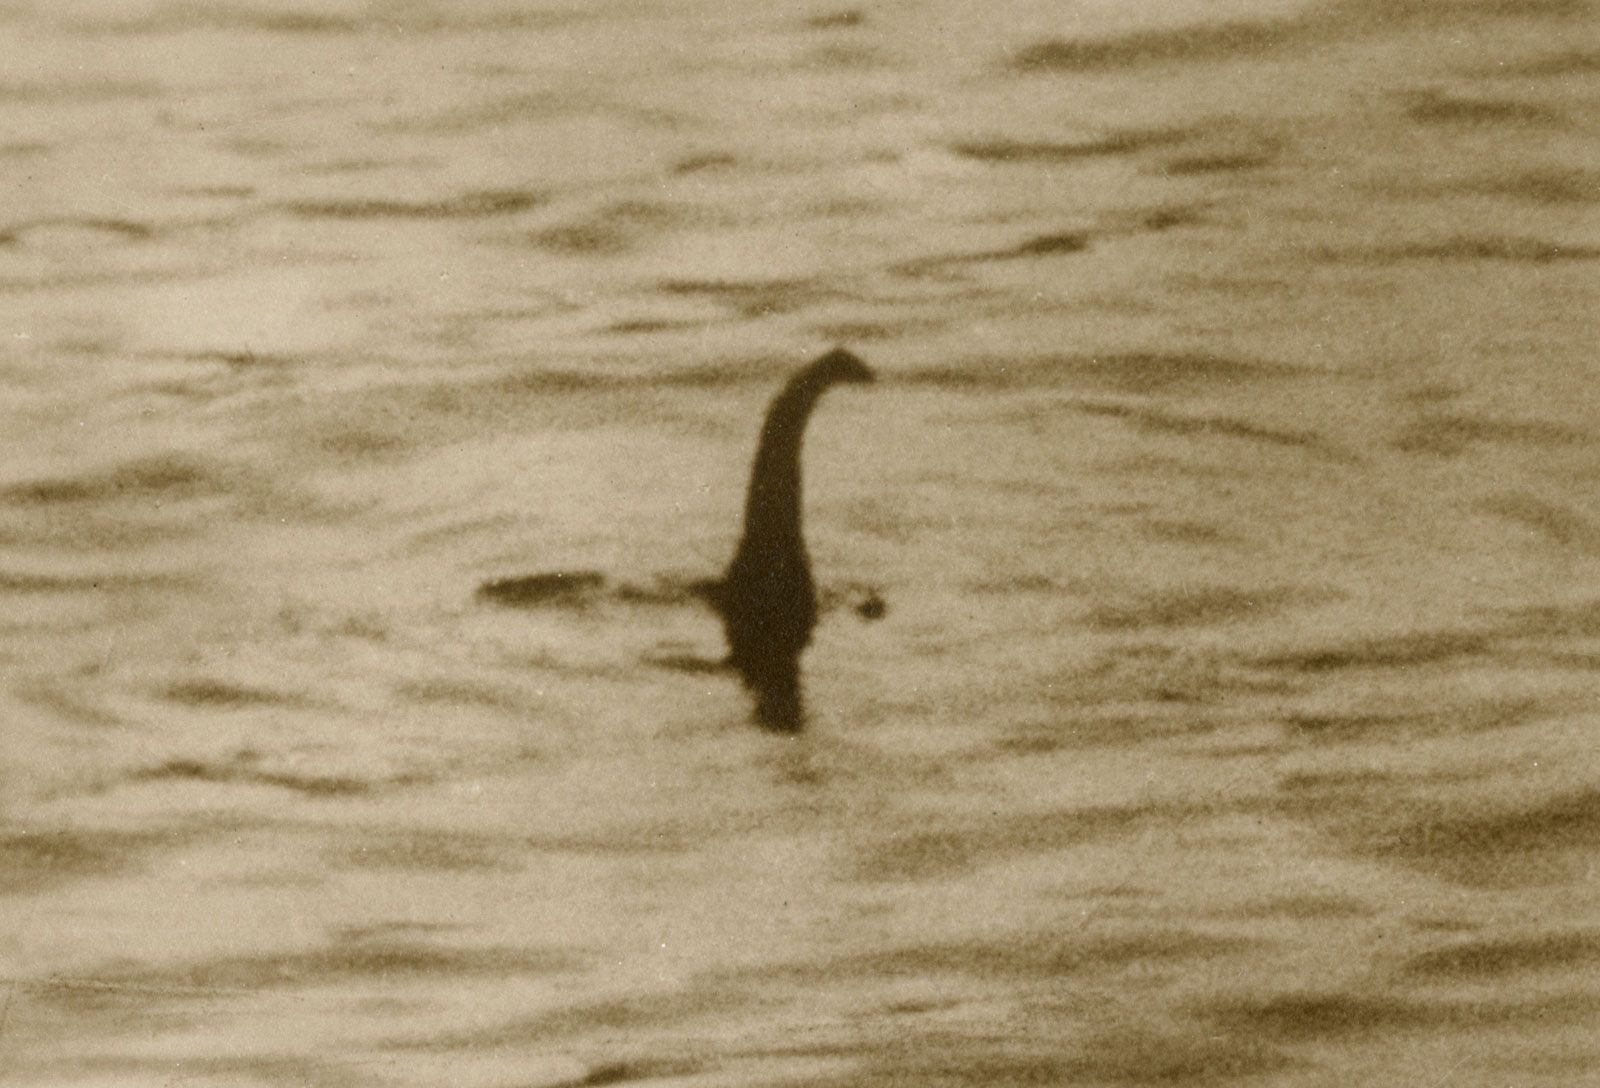 Photograph-image-Loch-Ness-monster-surgeon-hoax-1934.jpg